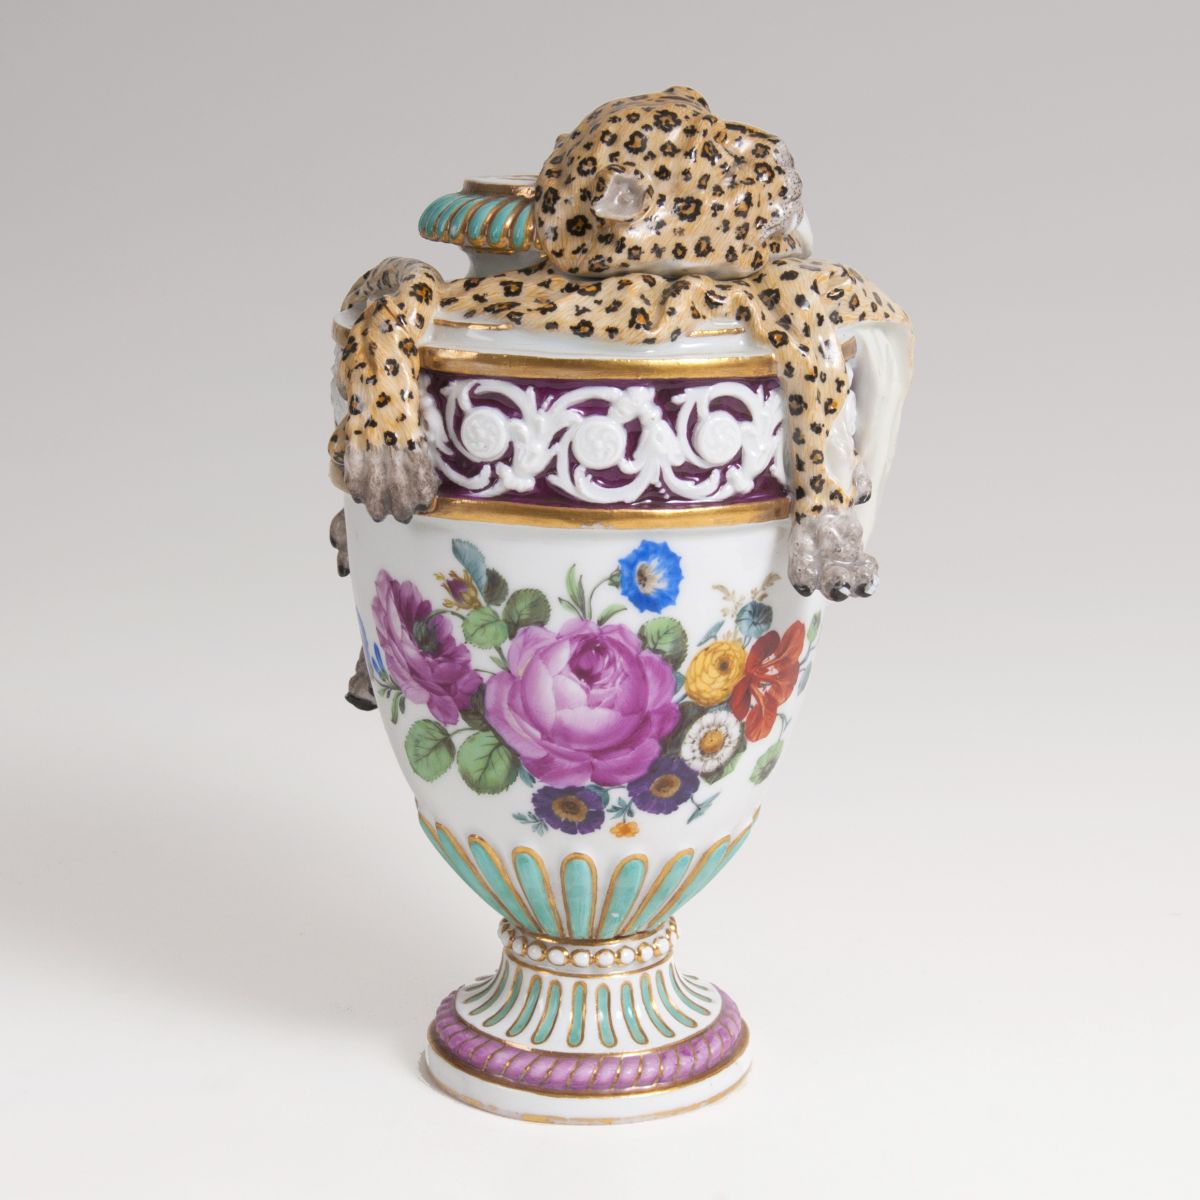 Seltene Potpourri-Vase mit Leopardenfell